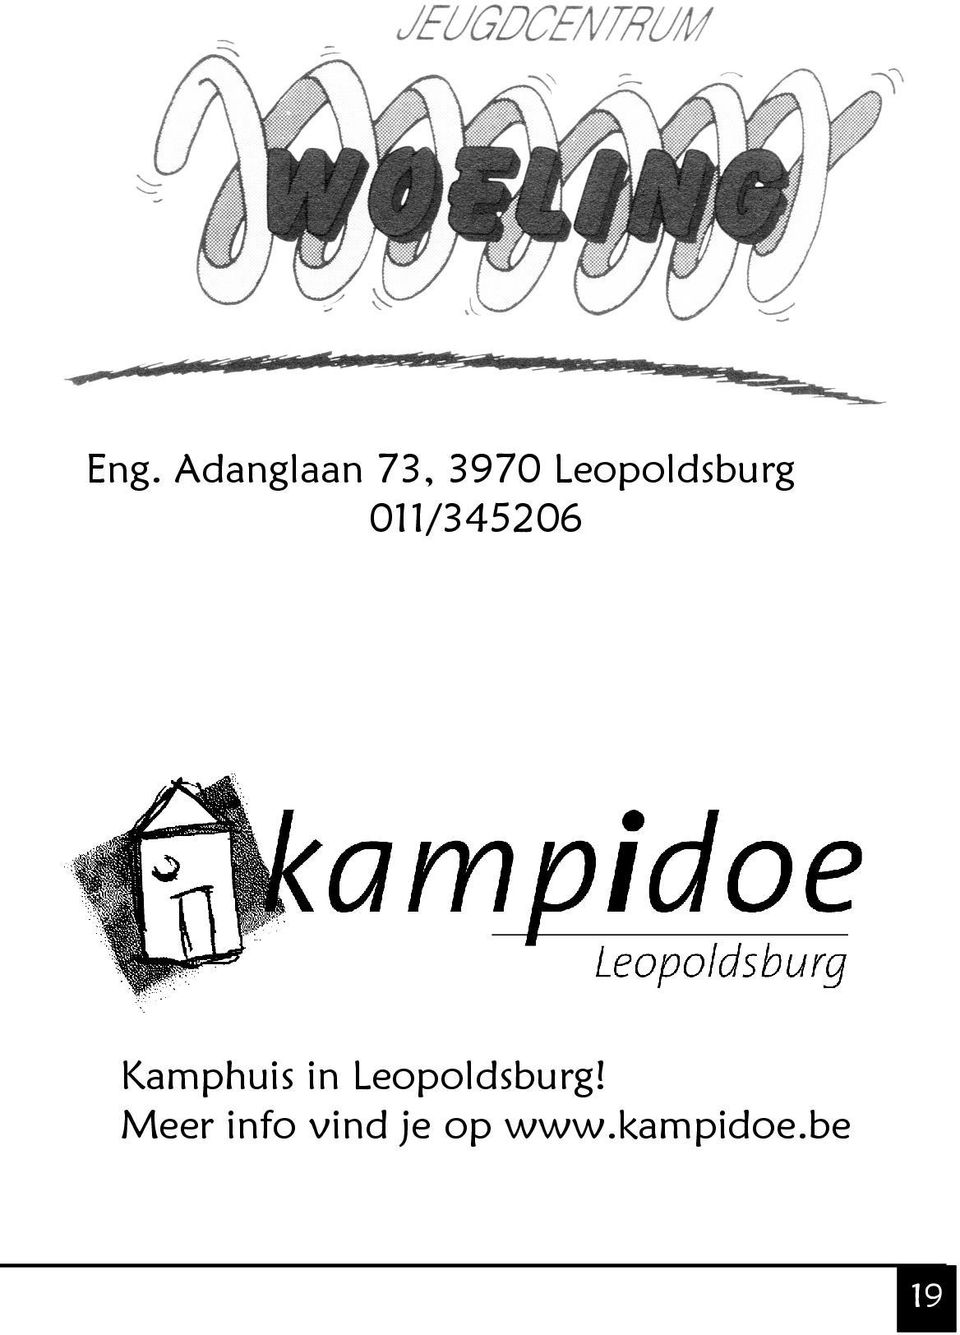 Kamphuis in Leopoldsburg!